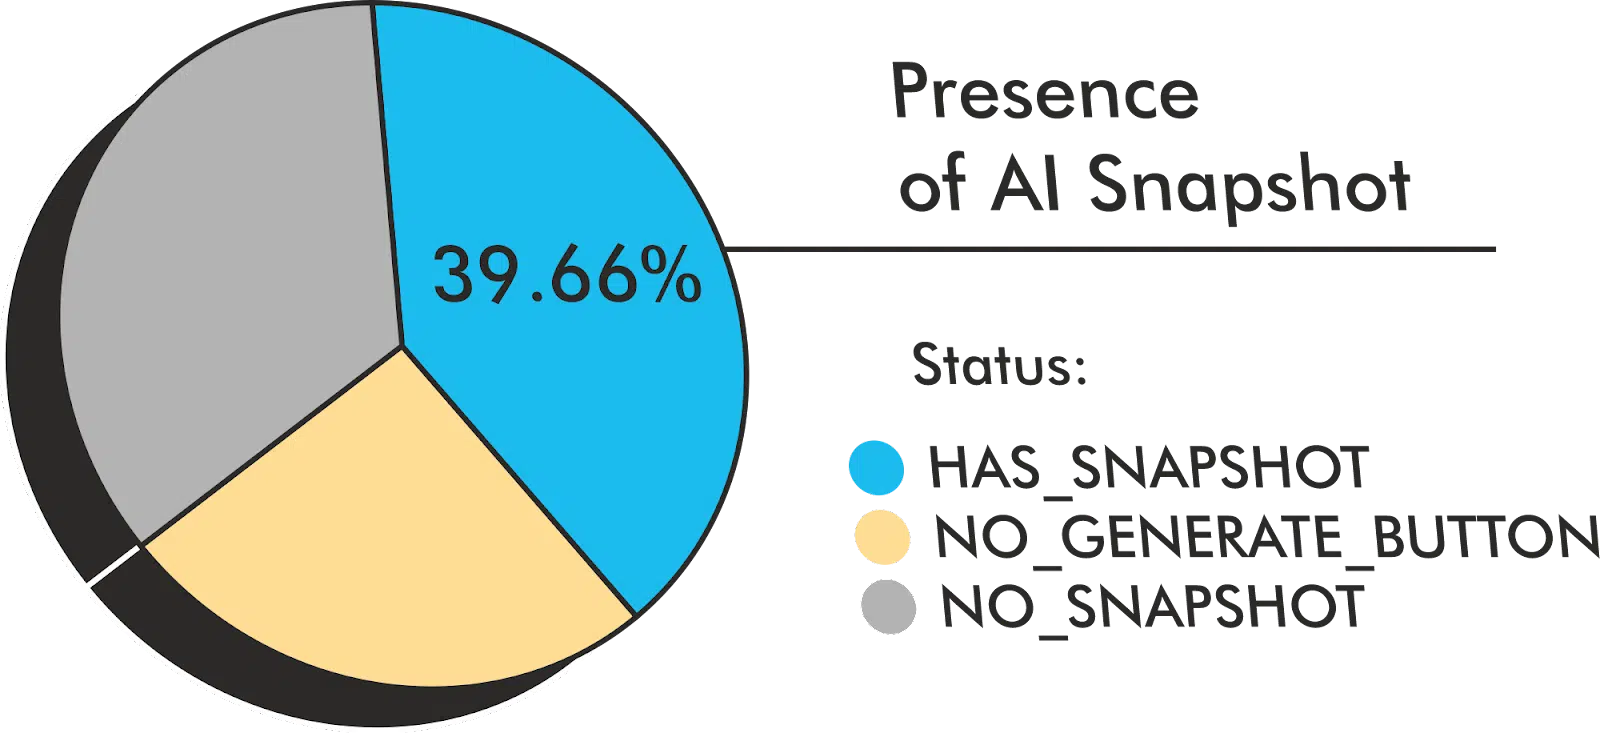 Presence of AI snapshot